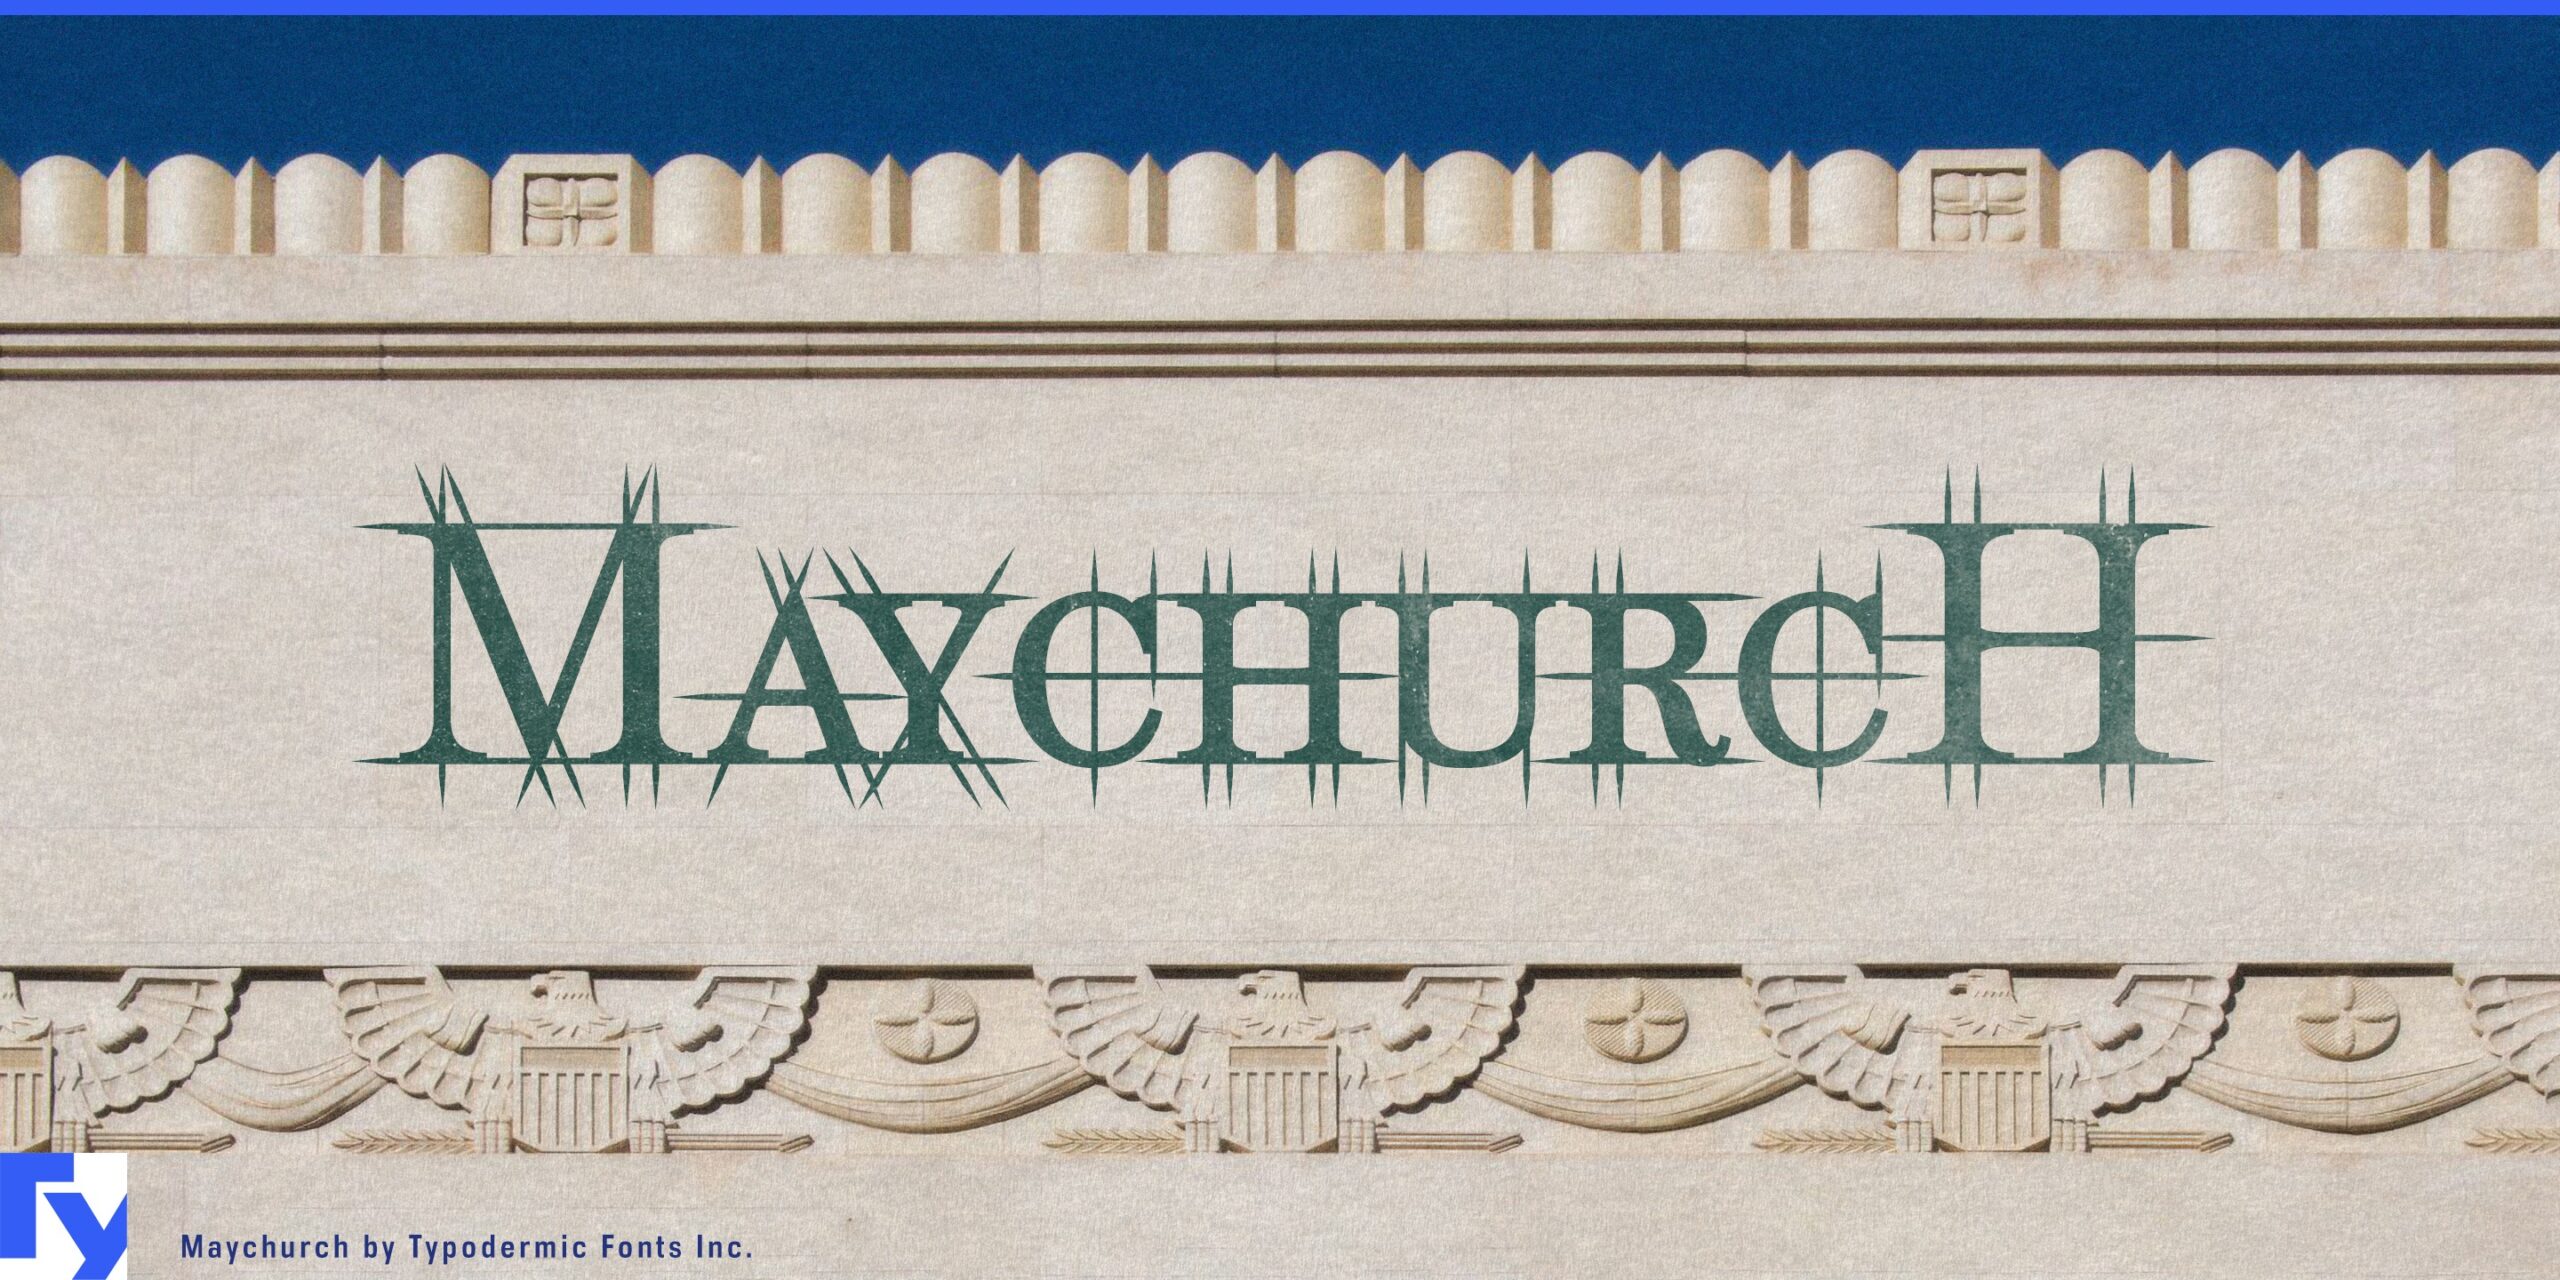 Maychurch Typeface: Unparalleled Architectural Splendor